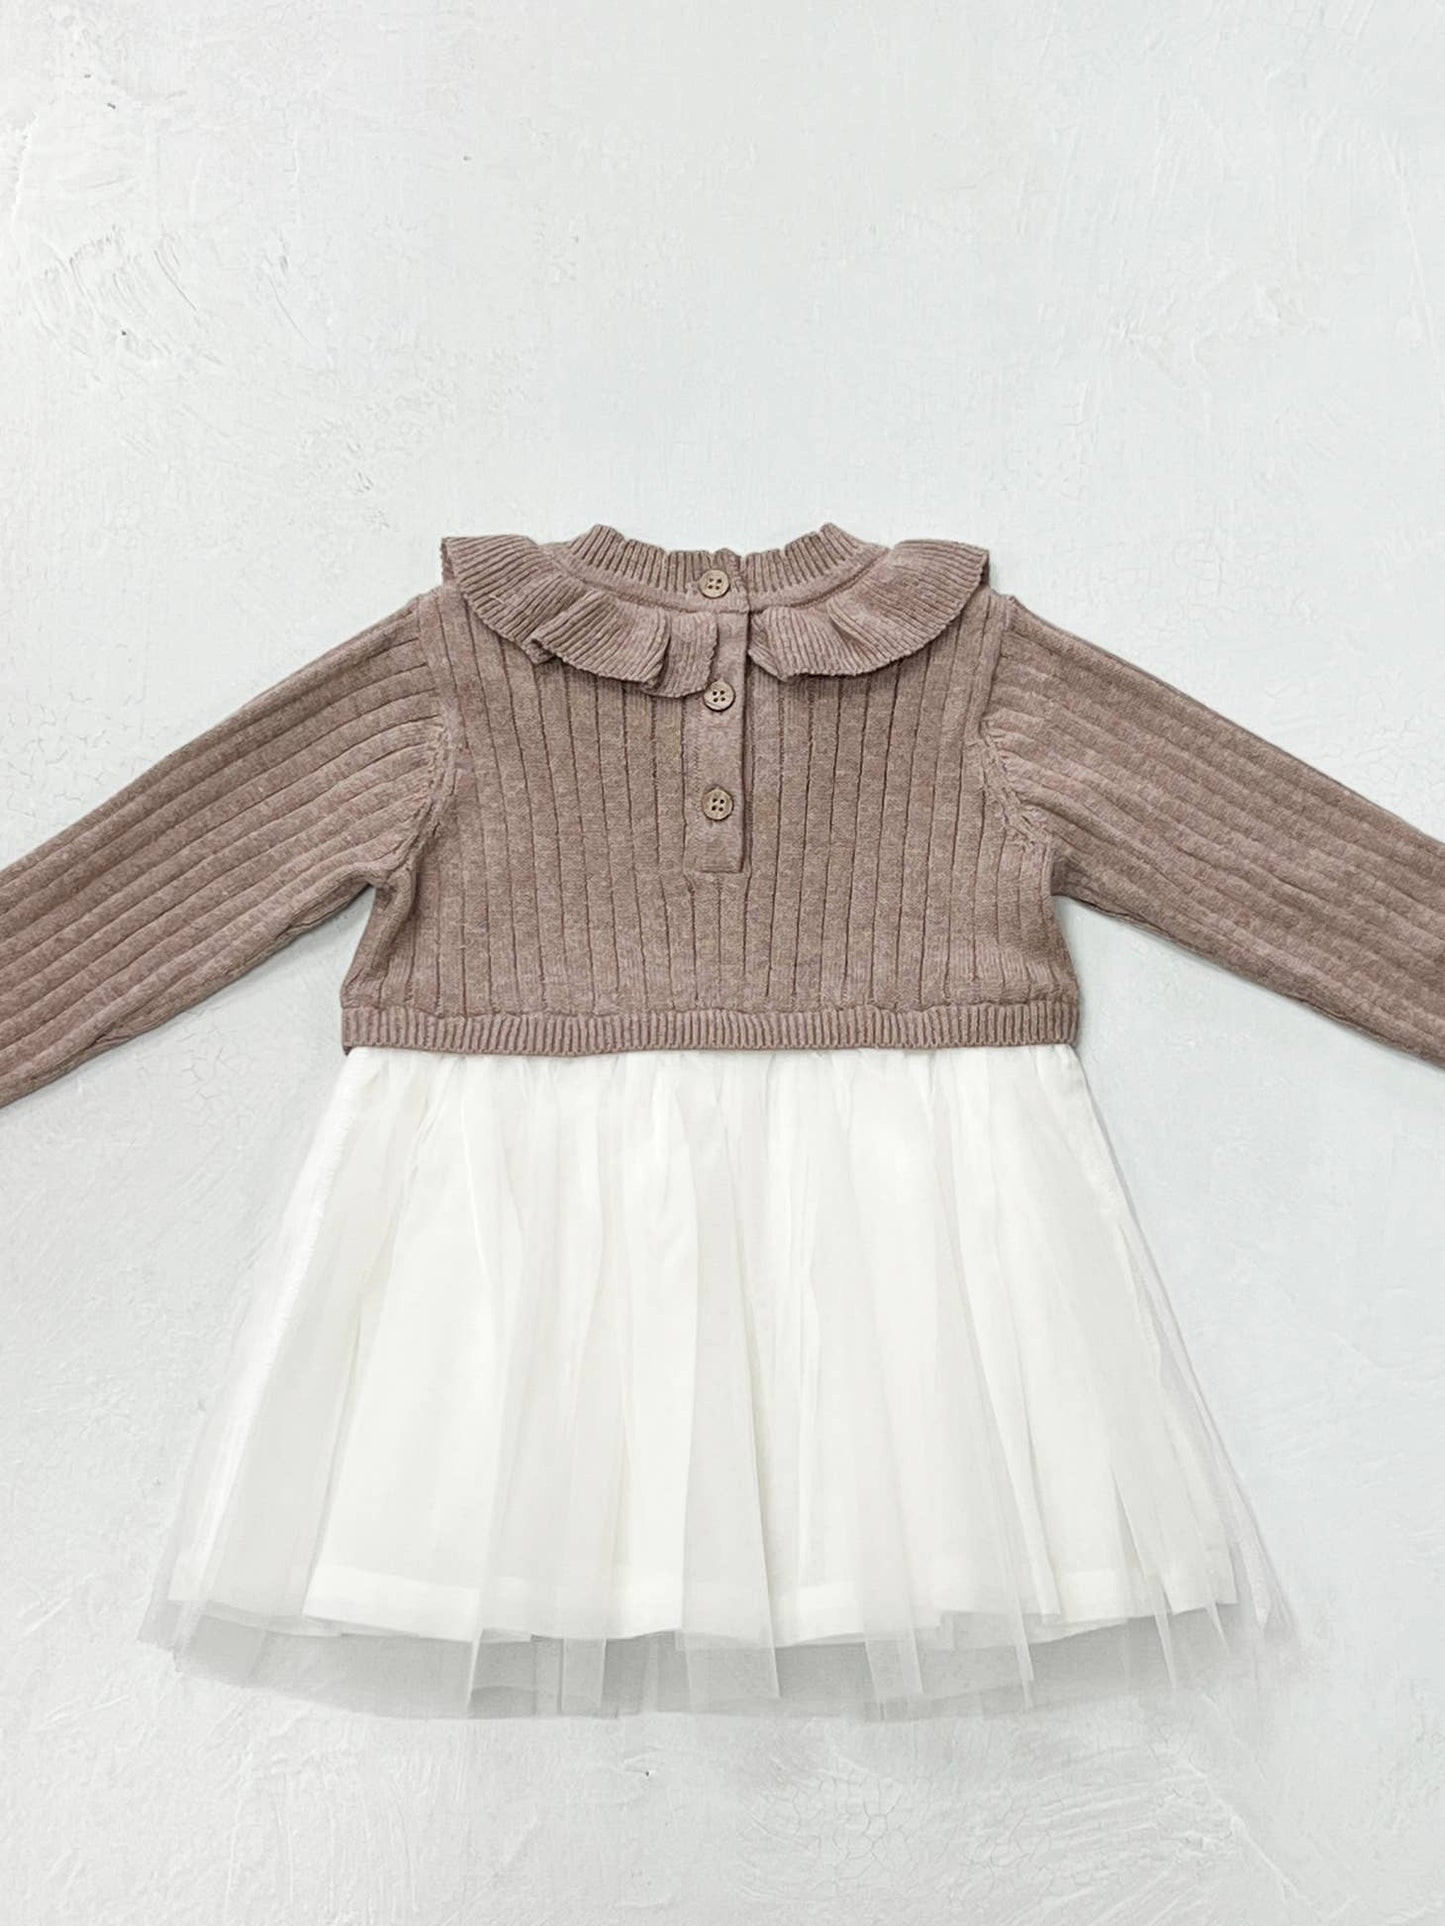 Sweater Top & Tutu Combo Baby Dress - Teal, Cafe Latte or Vintage Rose